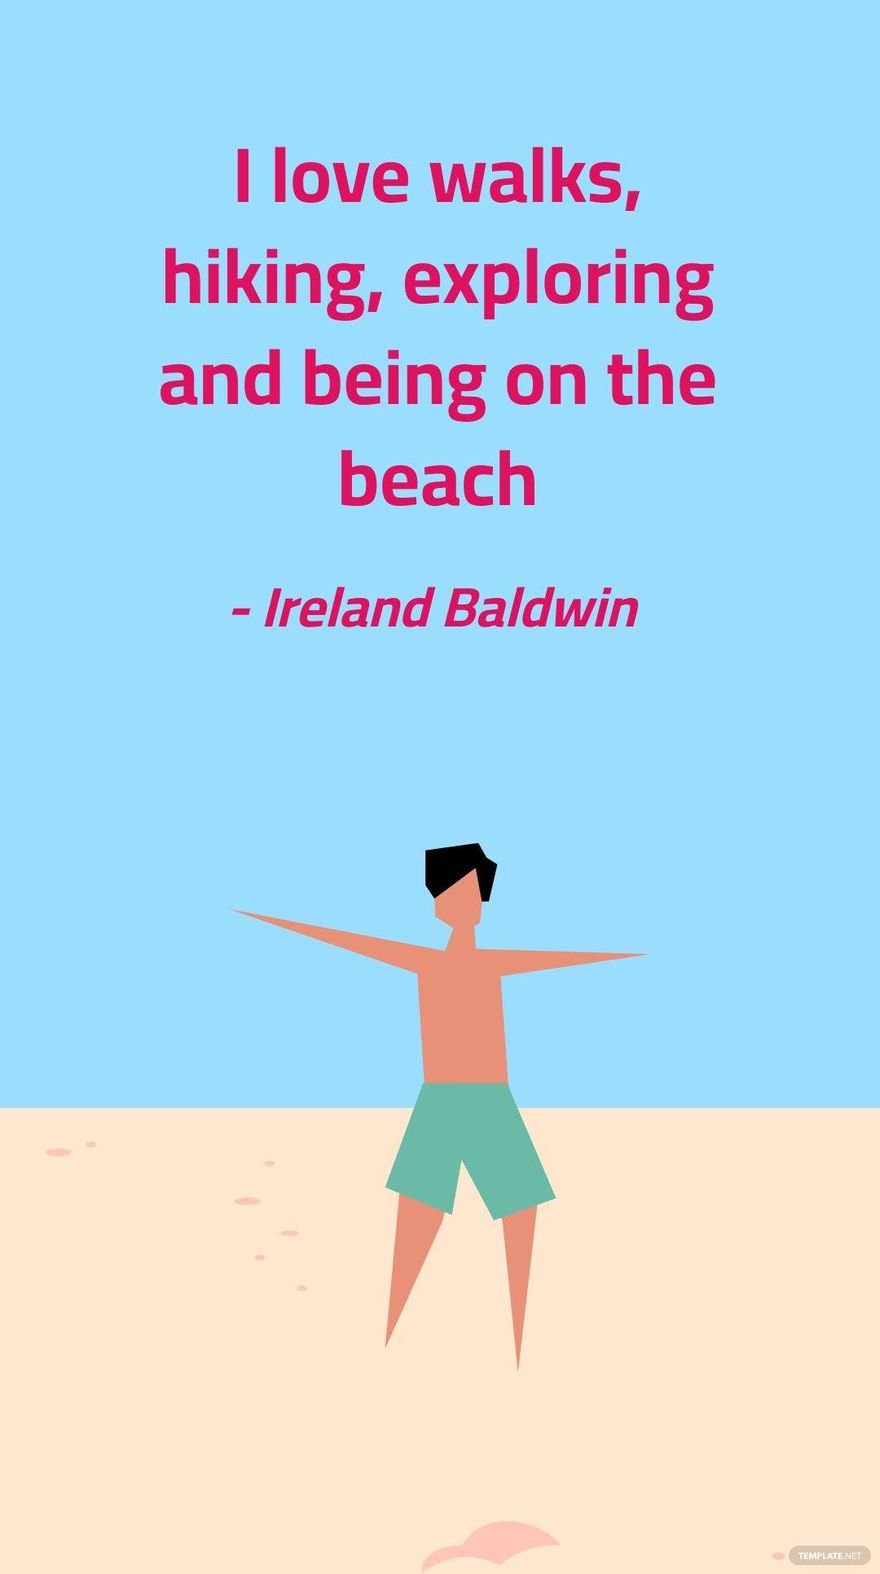 Free Ireland Baldwin - I love walks, hiking, exploring and being on the beach in JPG